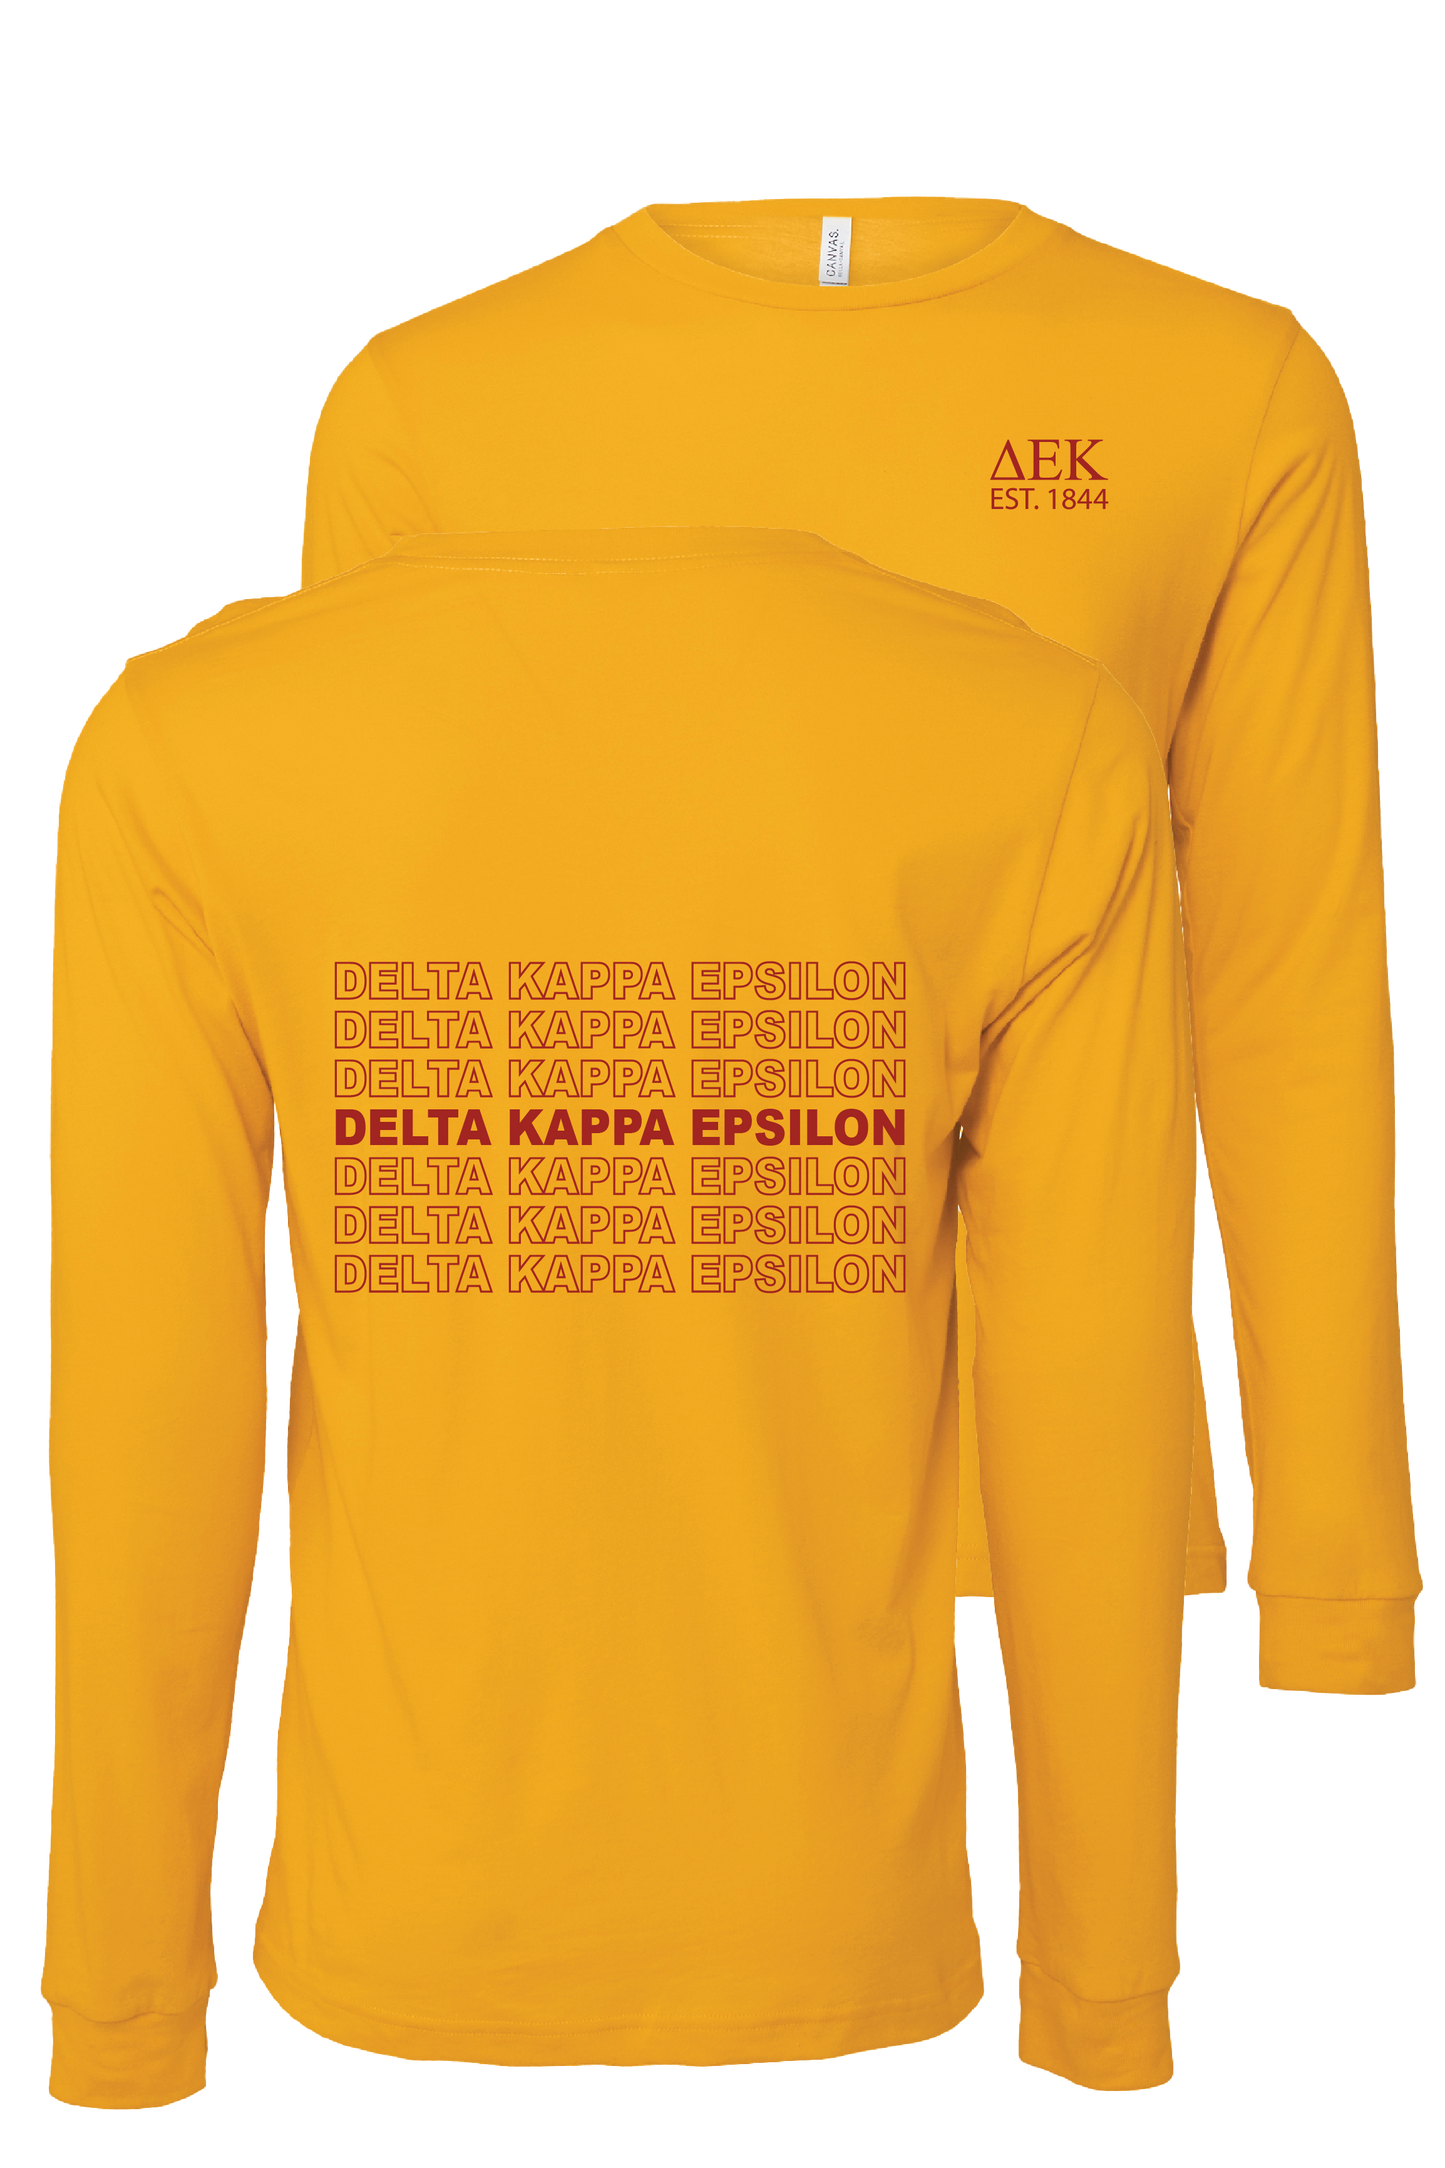 Delta Kappa Epsilon Repeating Name Long Sleeve T-Shirts